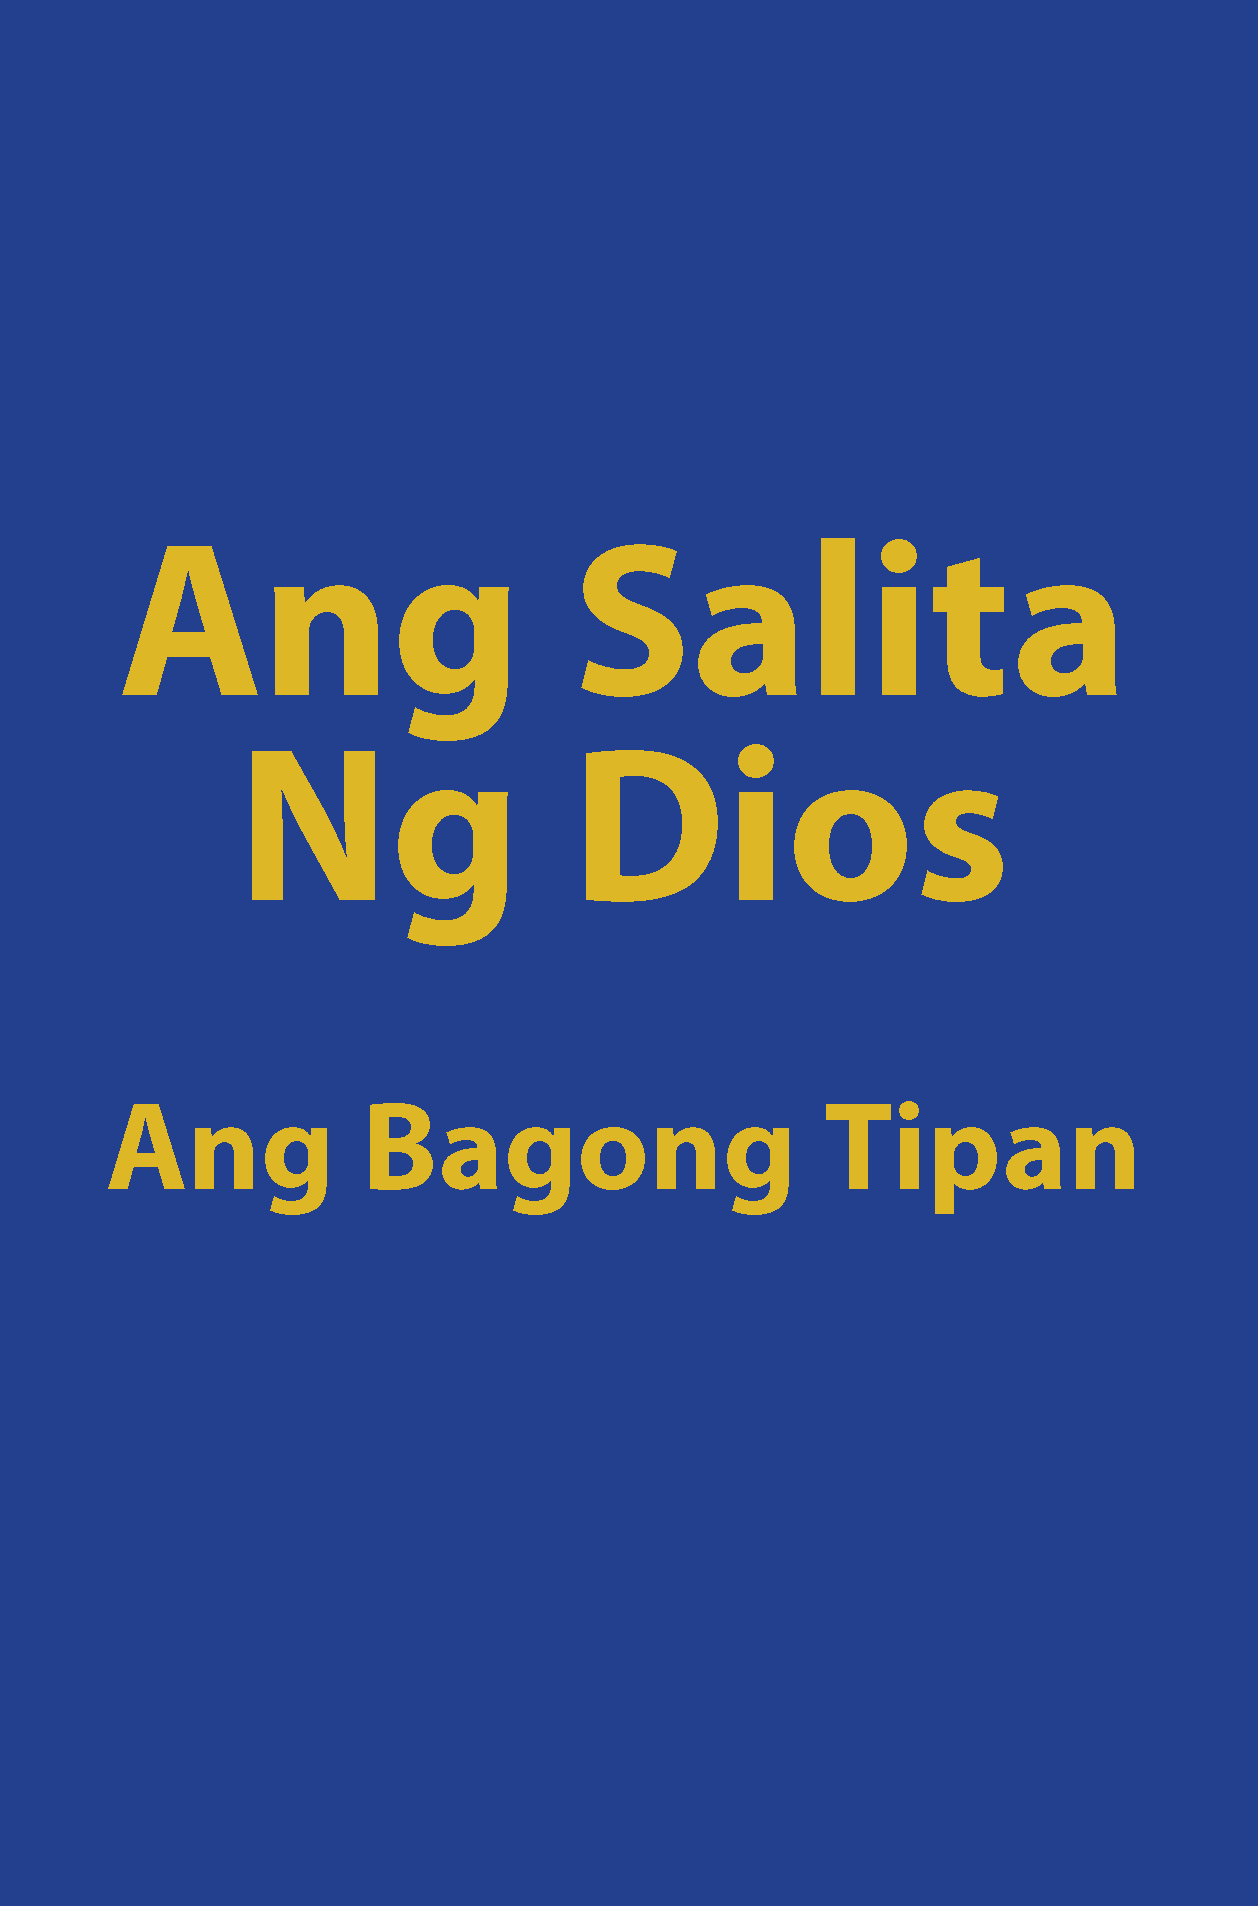 Tagalog New Testament